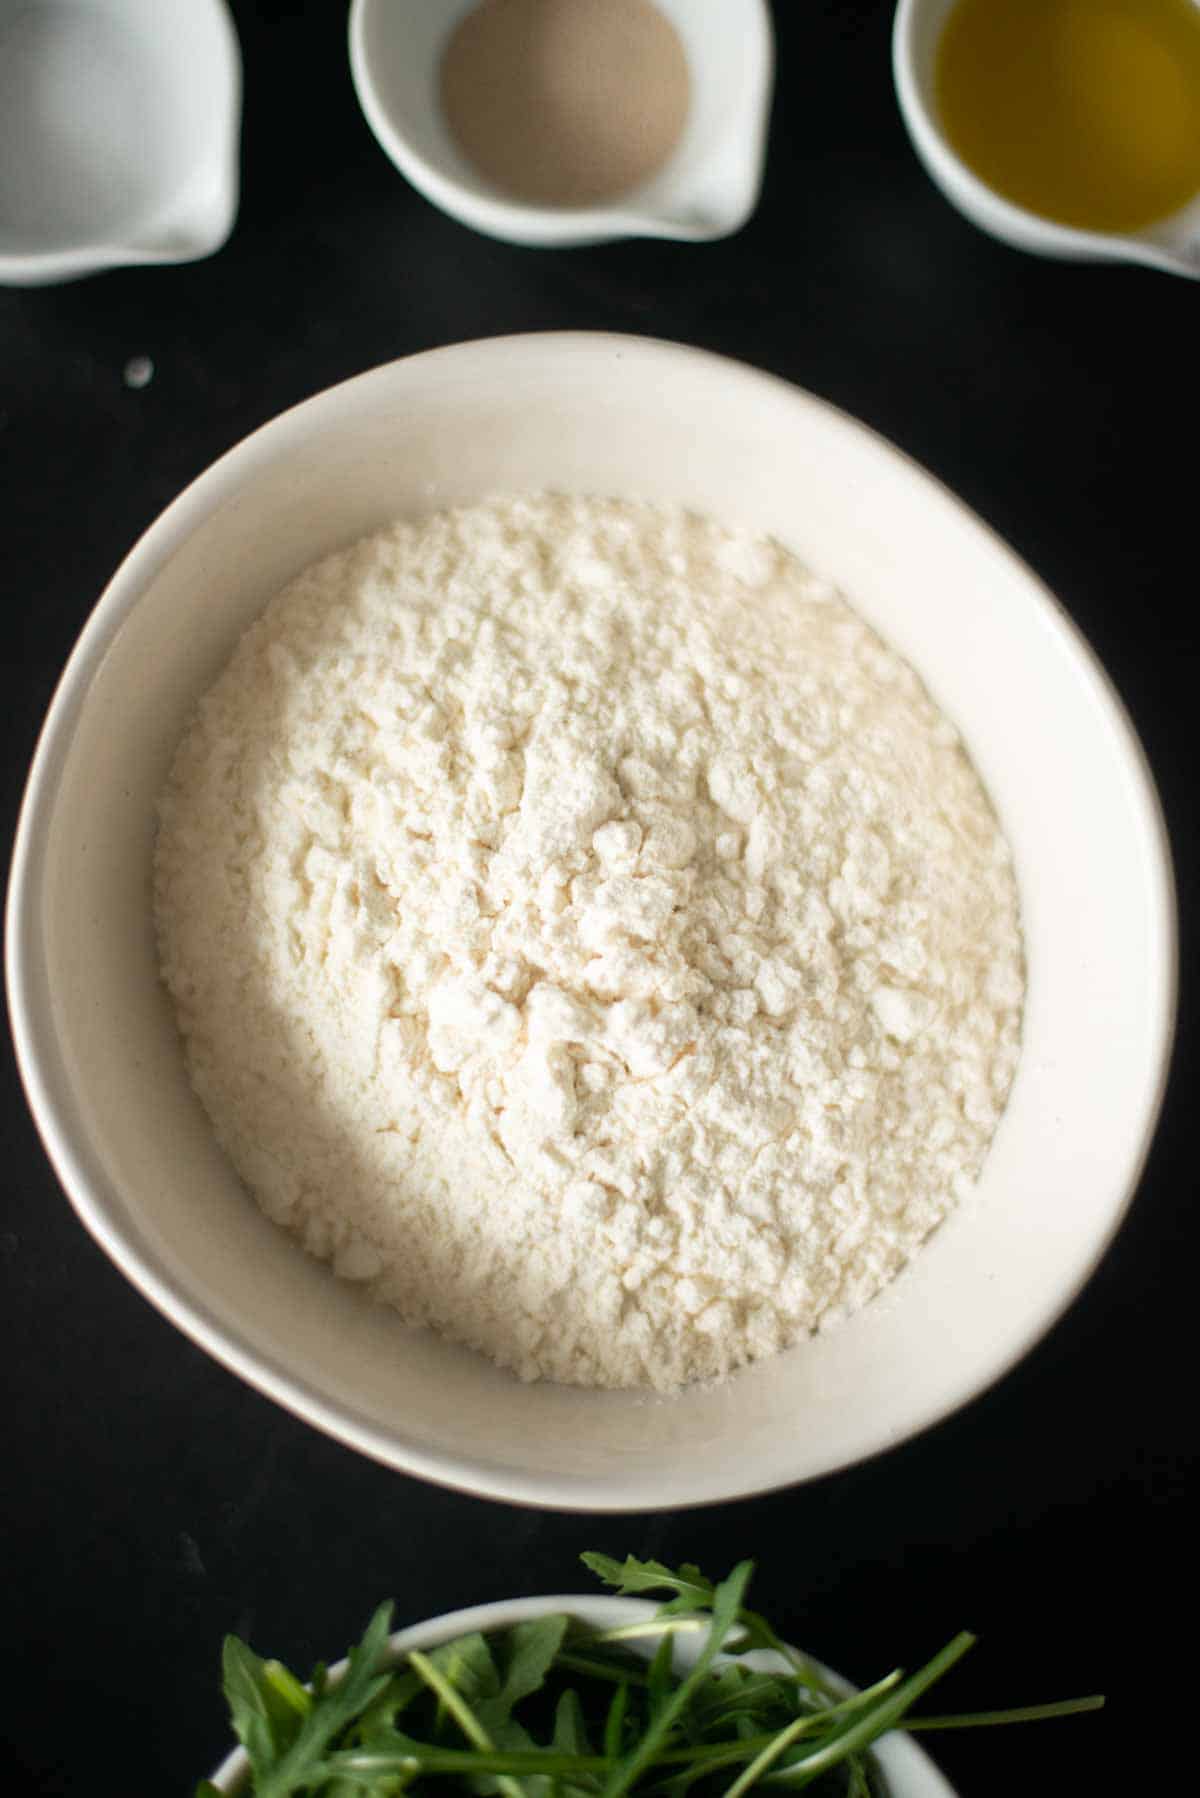 image: flour to make a vegan mushroom pizza